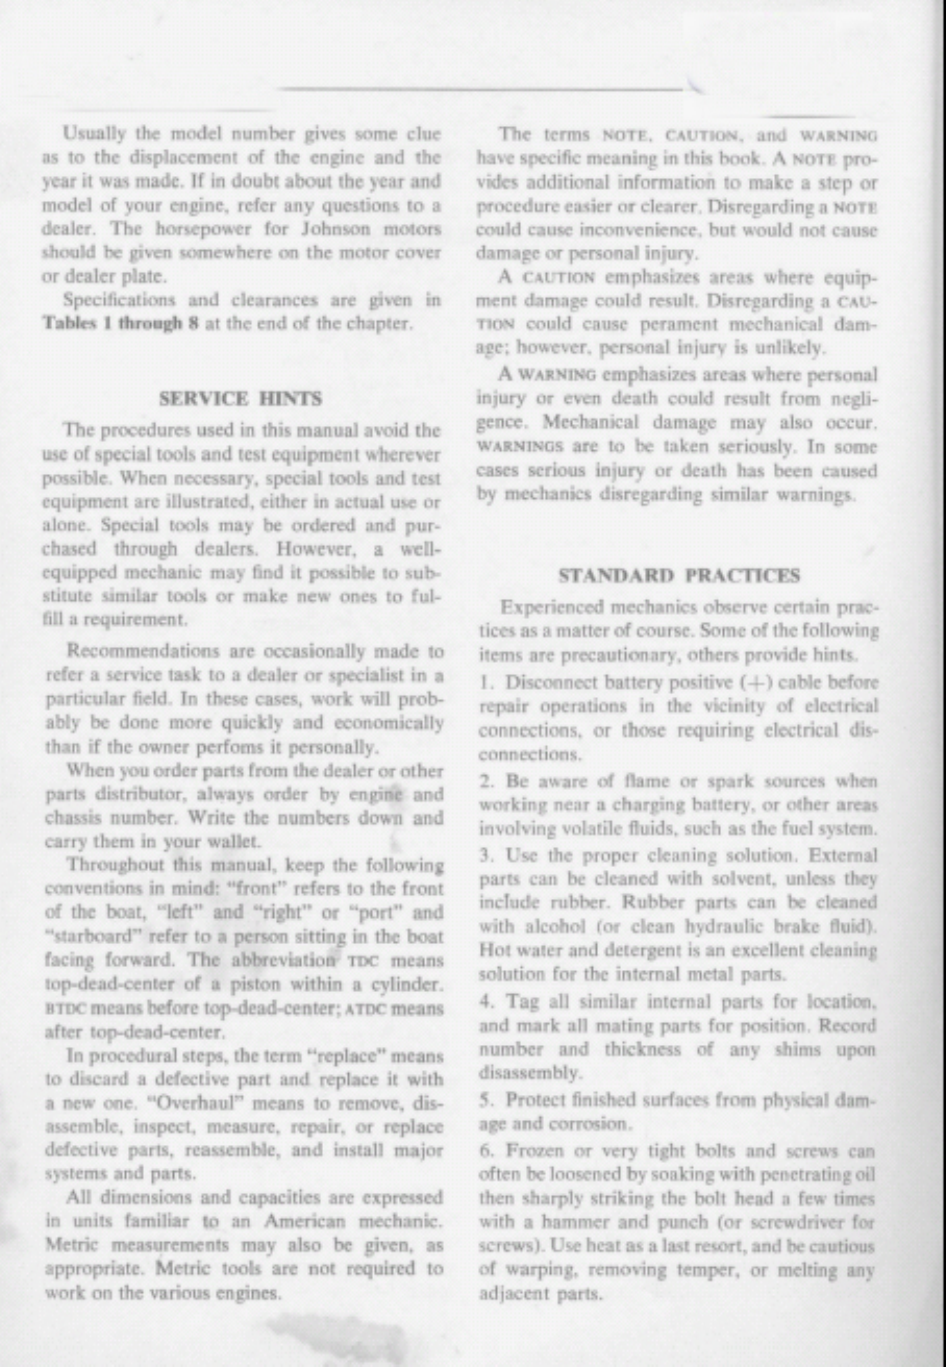 1965-1978 Evinrude Johnson 1.5hp, 2hp, 3hp, 4hp, 5hp, 6hp, 9.5hp, 9.9hp, 15hp, 18hp, 25hp, 33hp, 35hp outboard motor service repair handbook Preview image 4